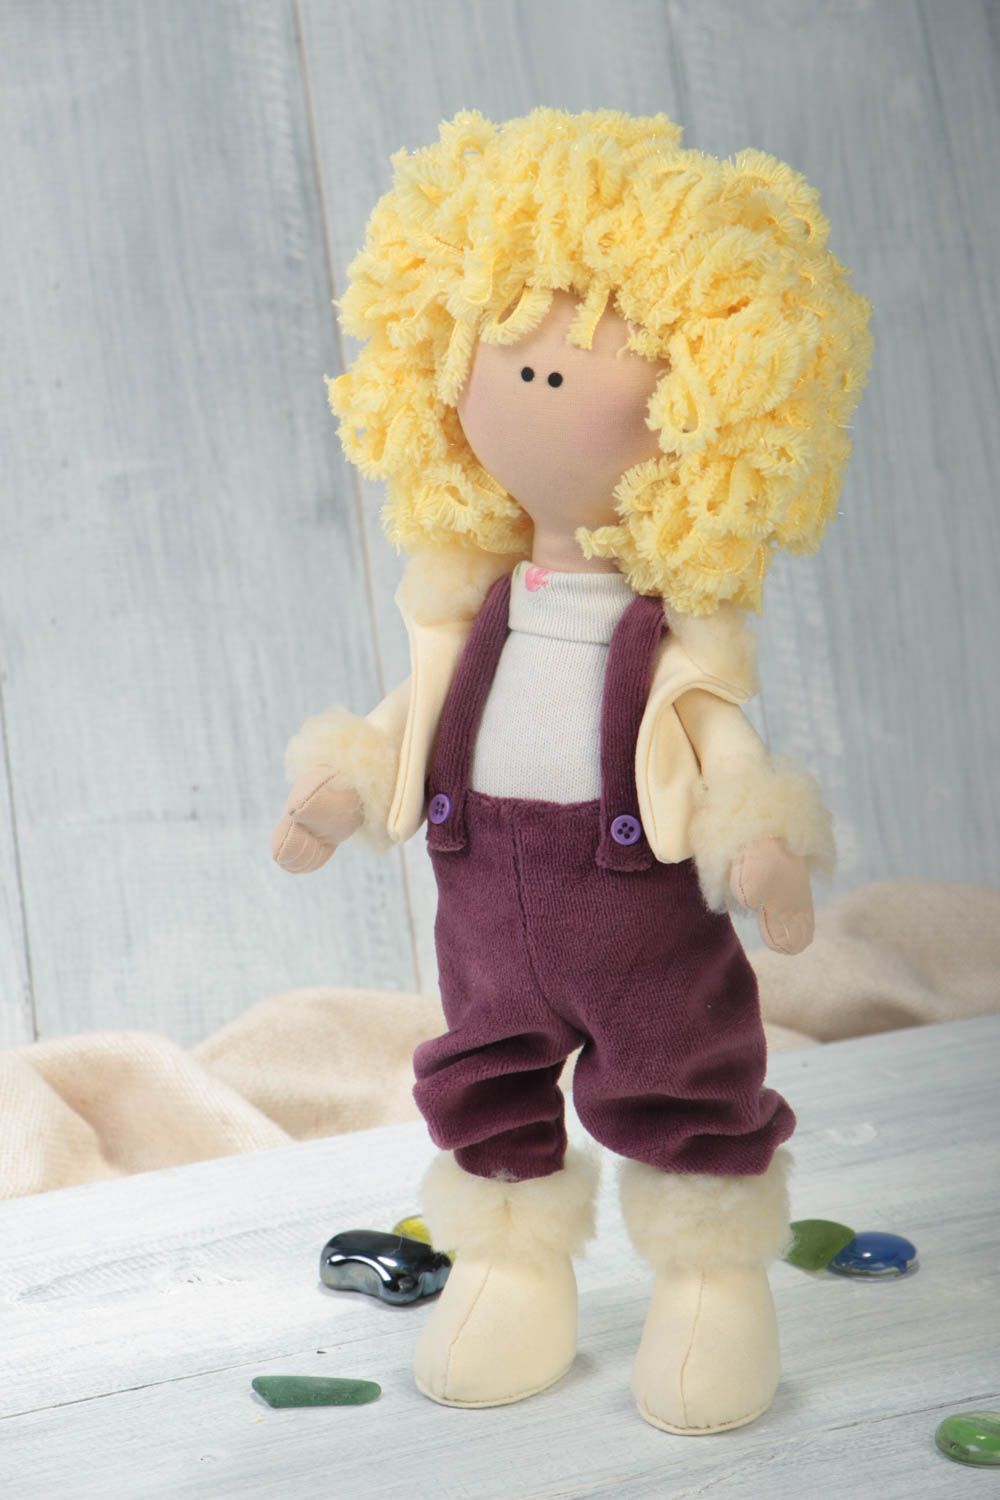 Handmade childrens rag doll textile stuffed toy interior decorating gift ideas photo 1